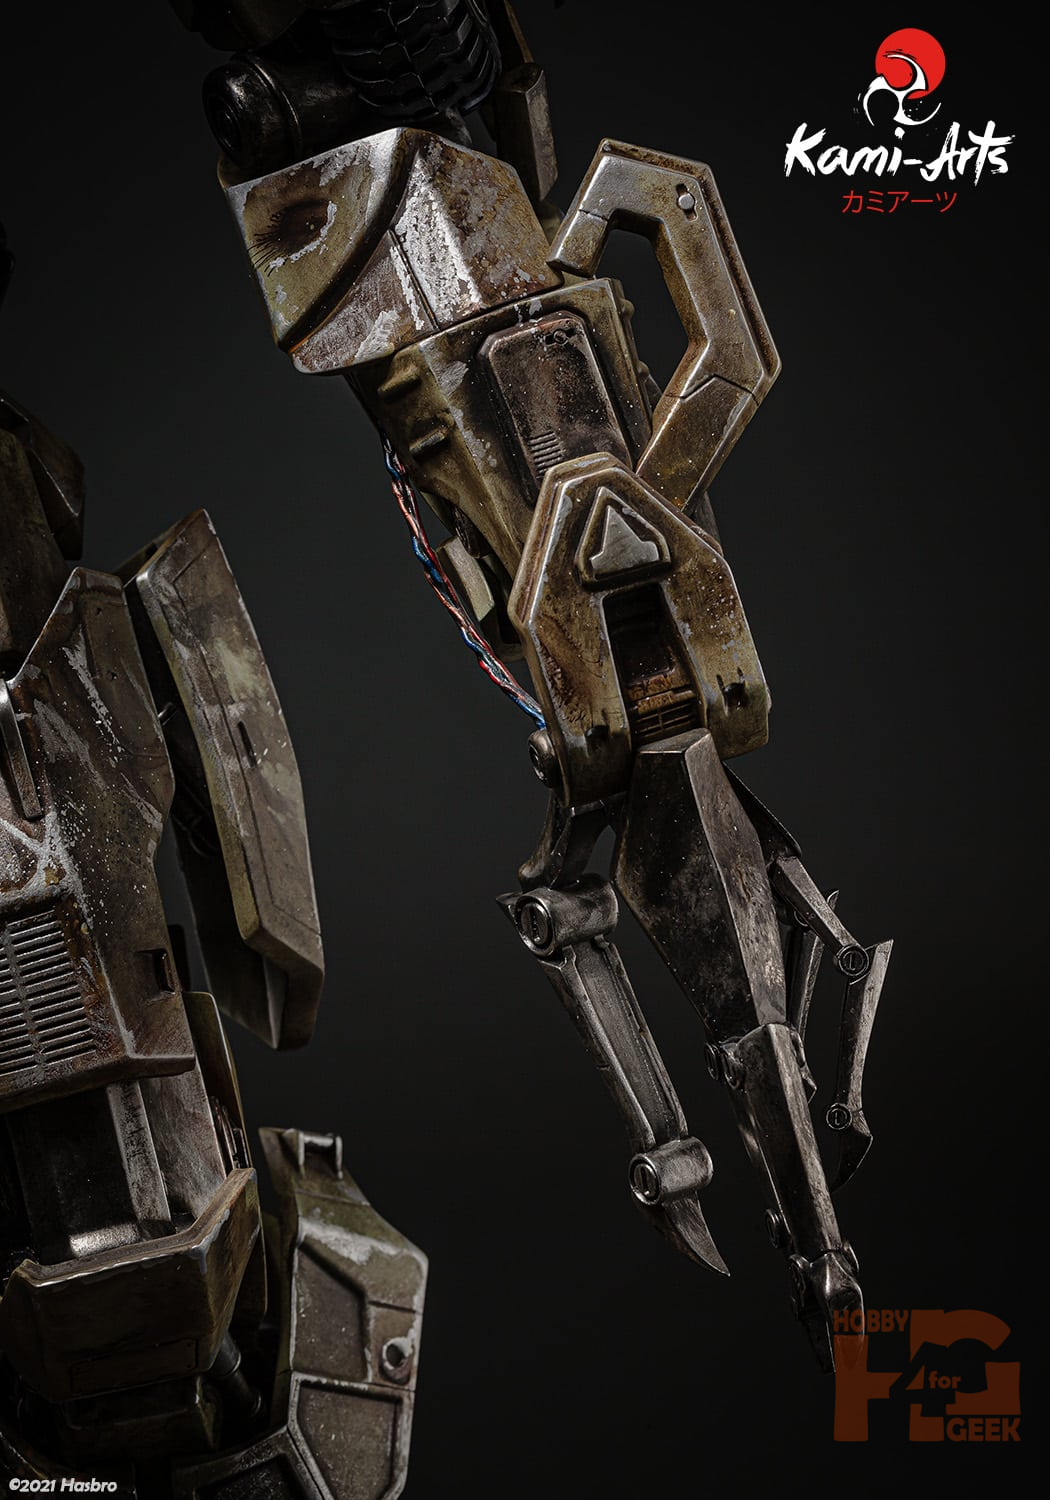 Kami Arts Transformers Megatron Statua Vitrina